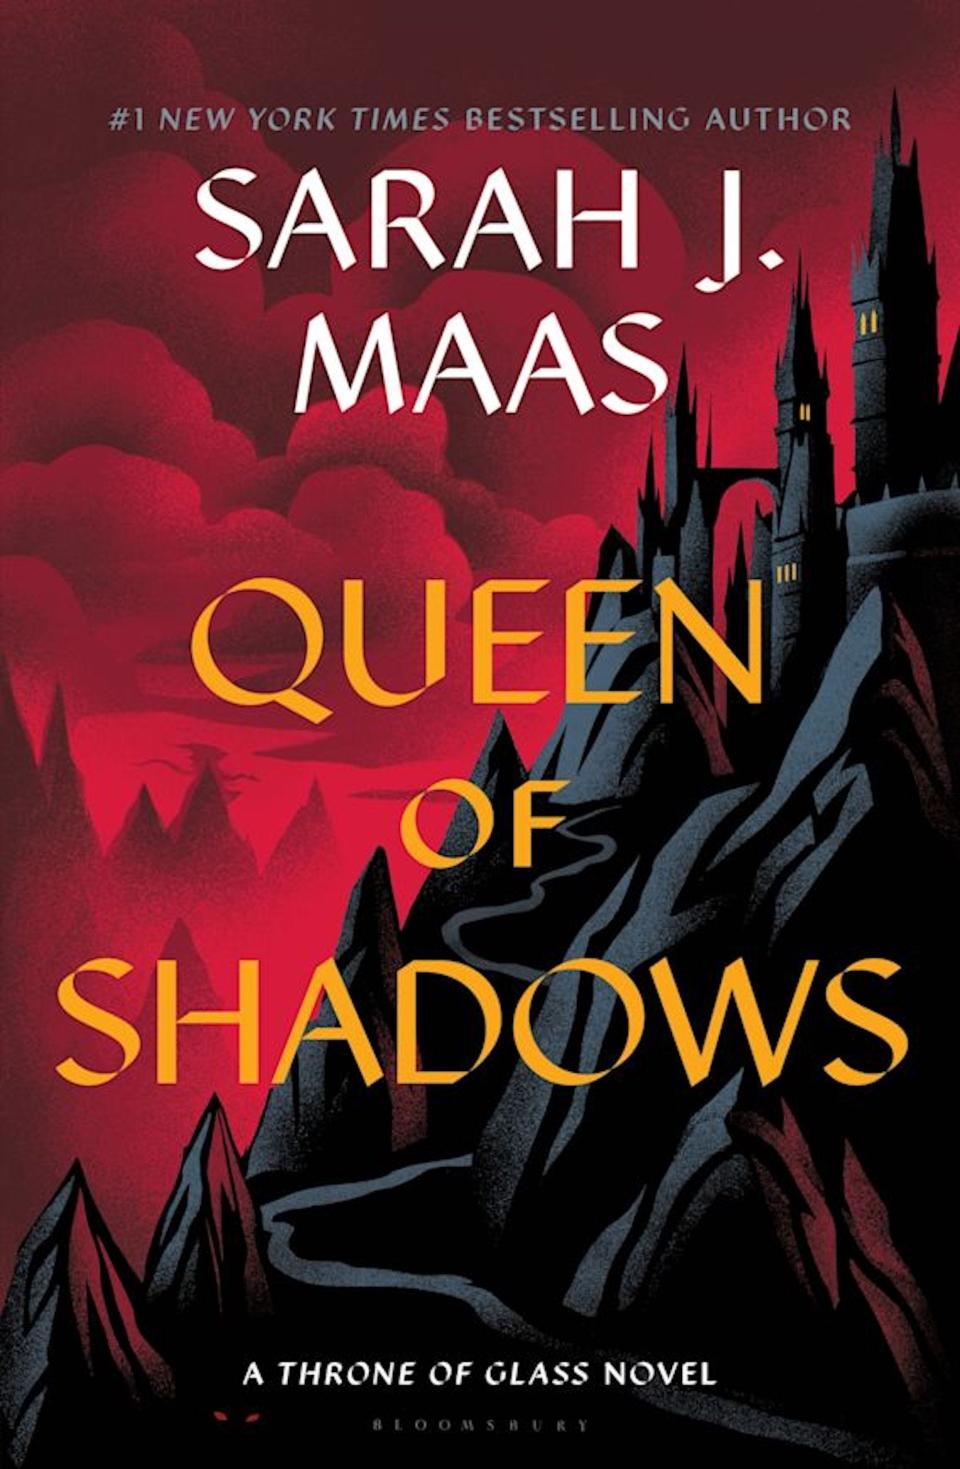 "Queen of Shadows" by Sarah J. Maas.